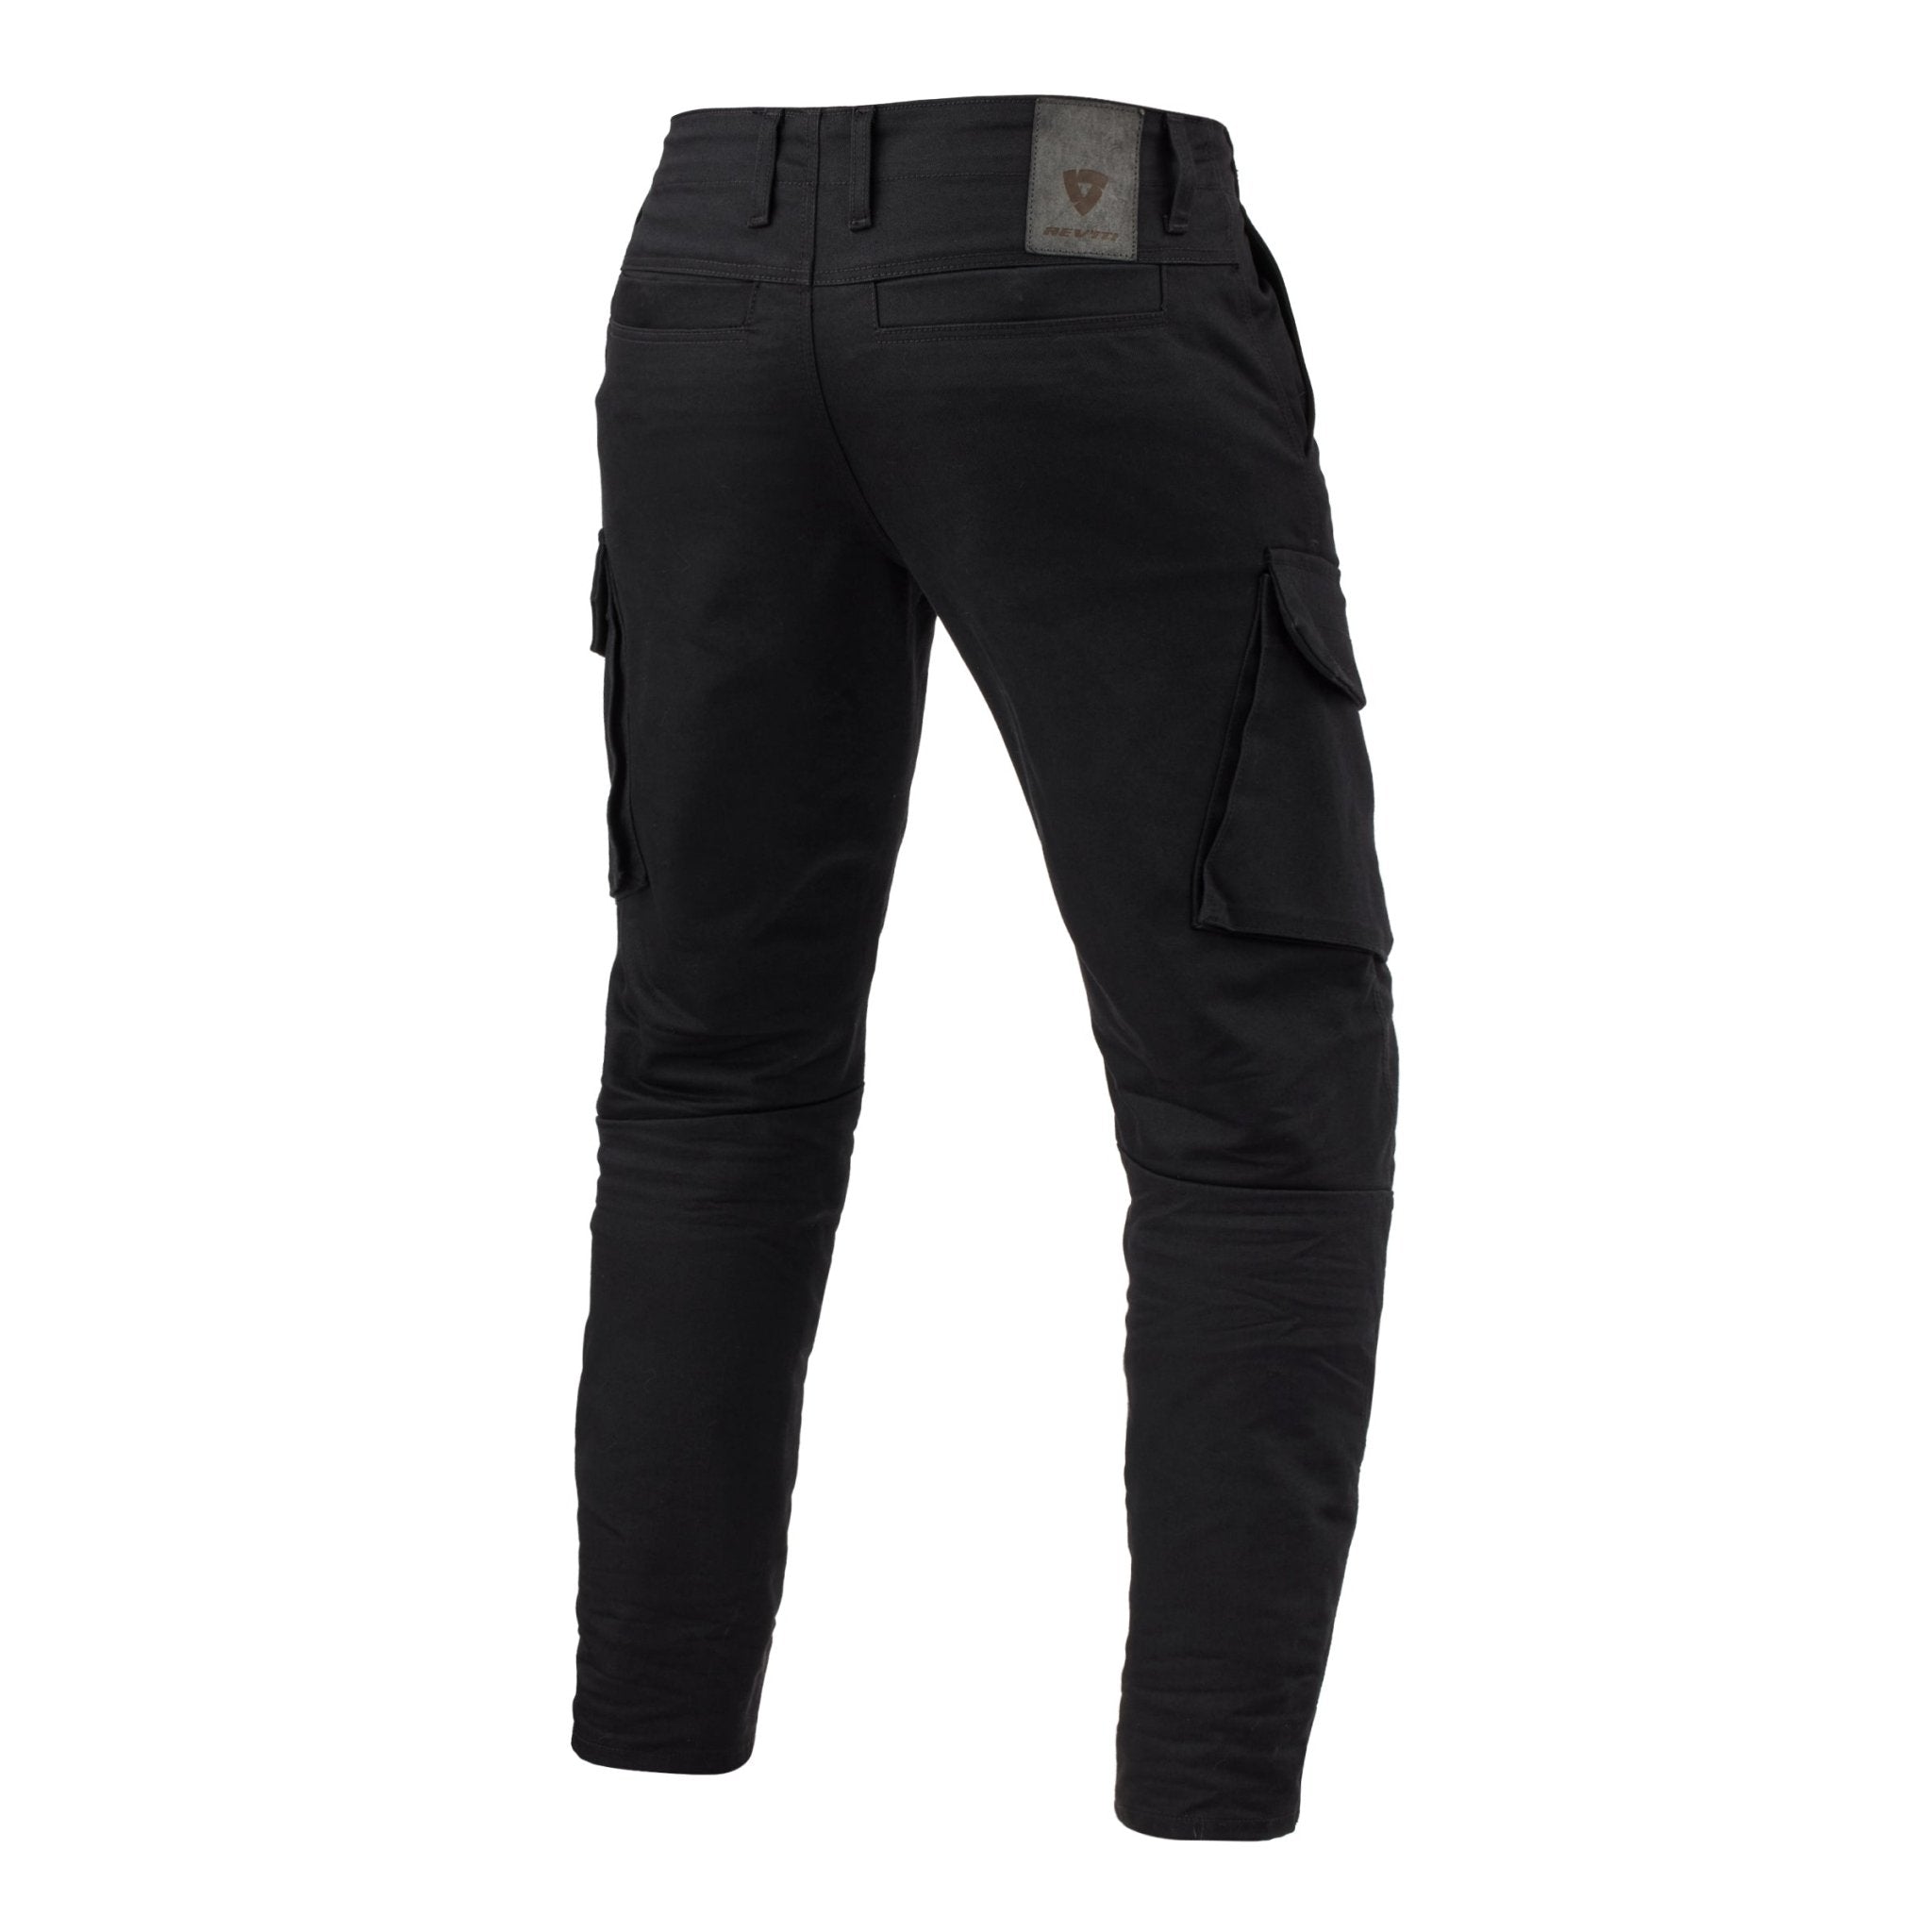 REV'IT! | Cargo 2 TF Pants - Black - Men's Pants - Peak Moto